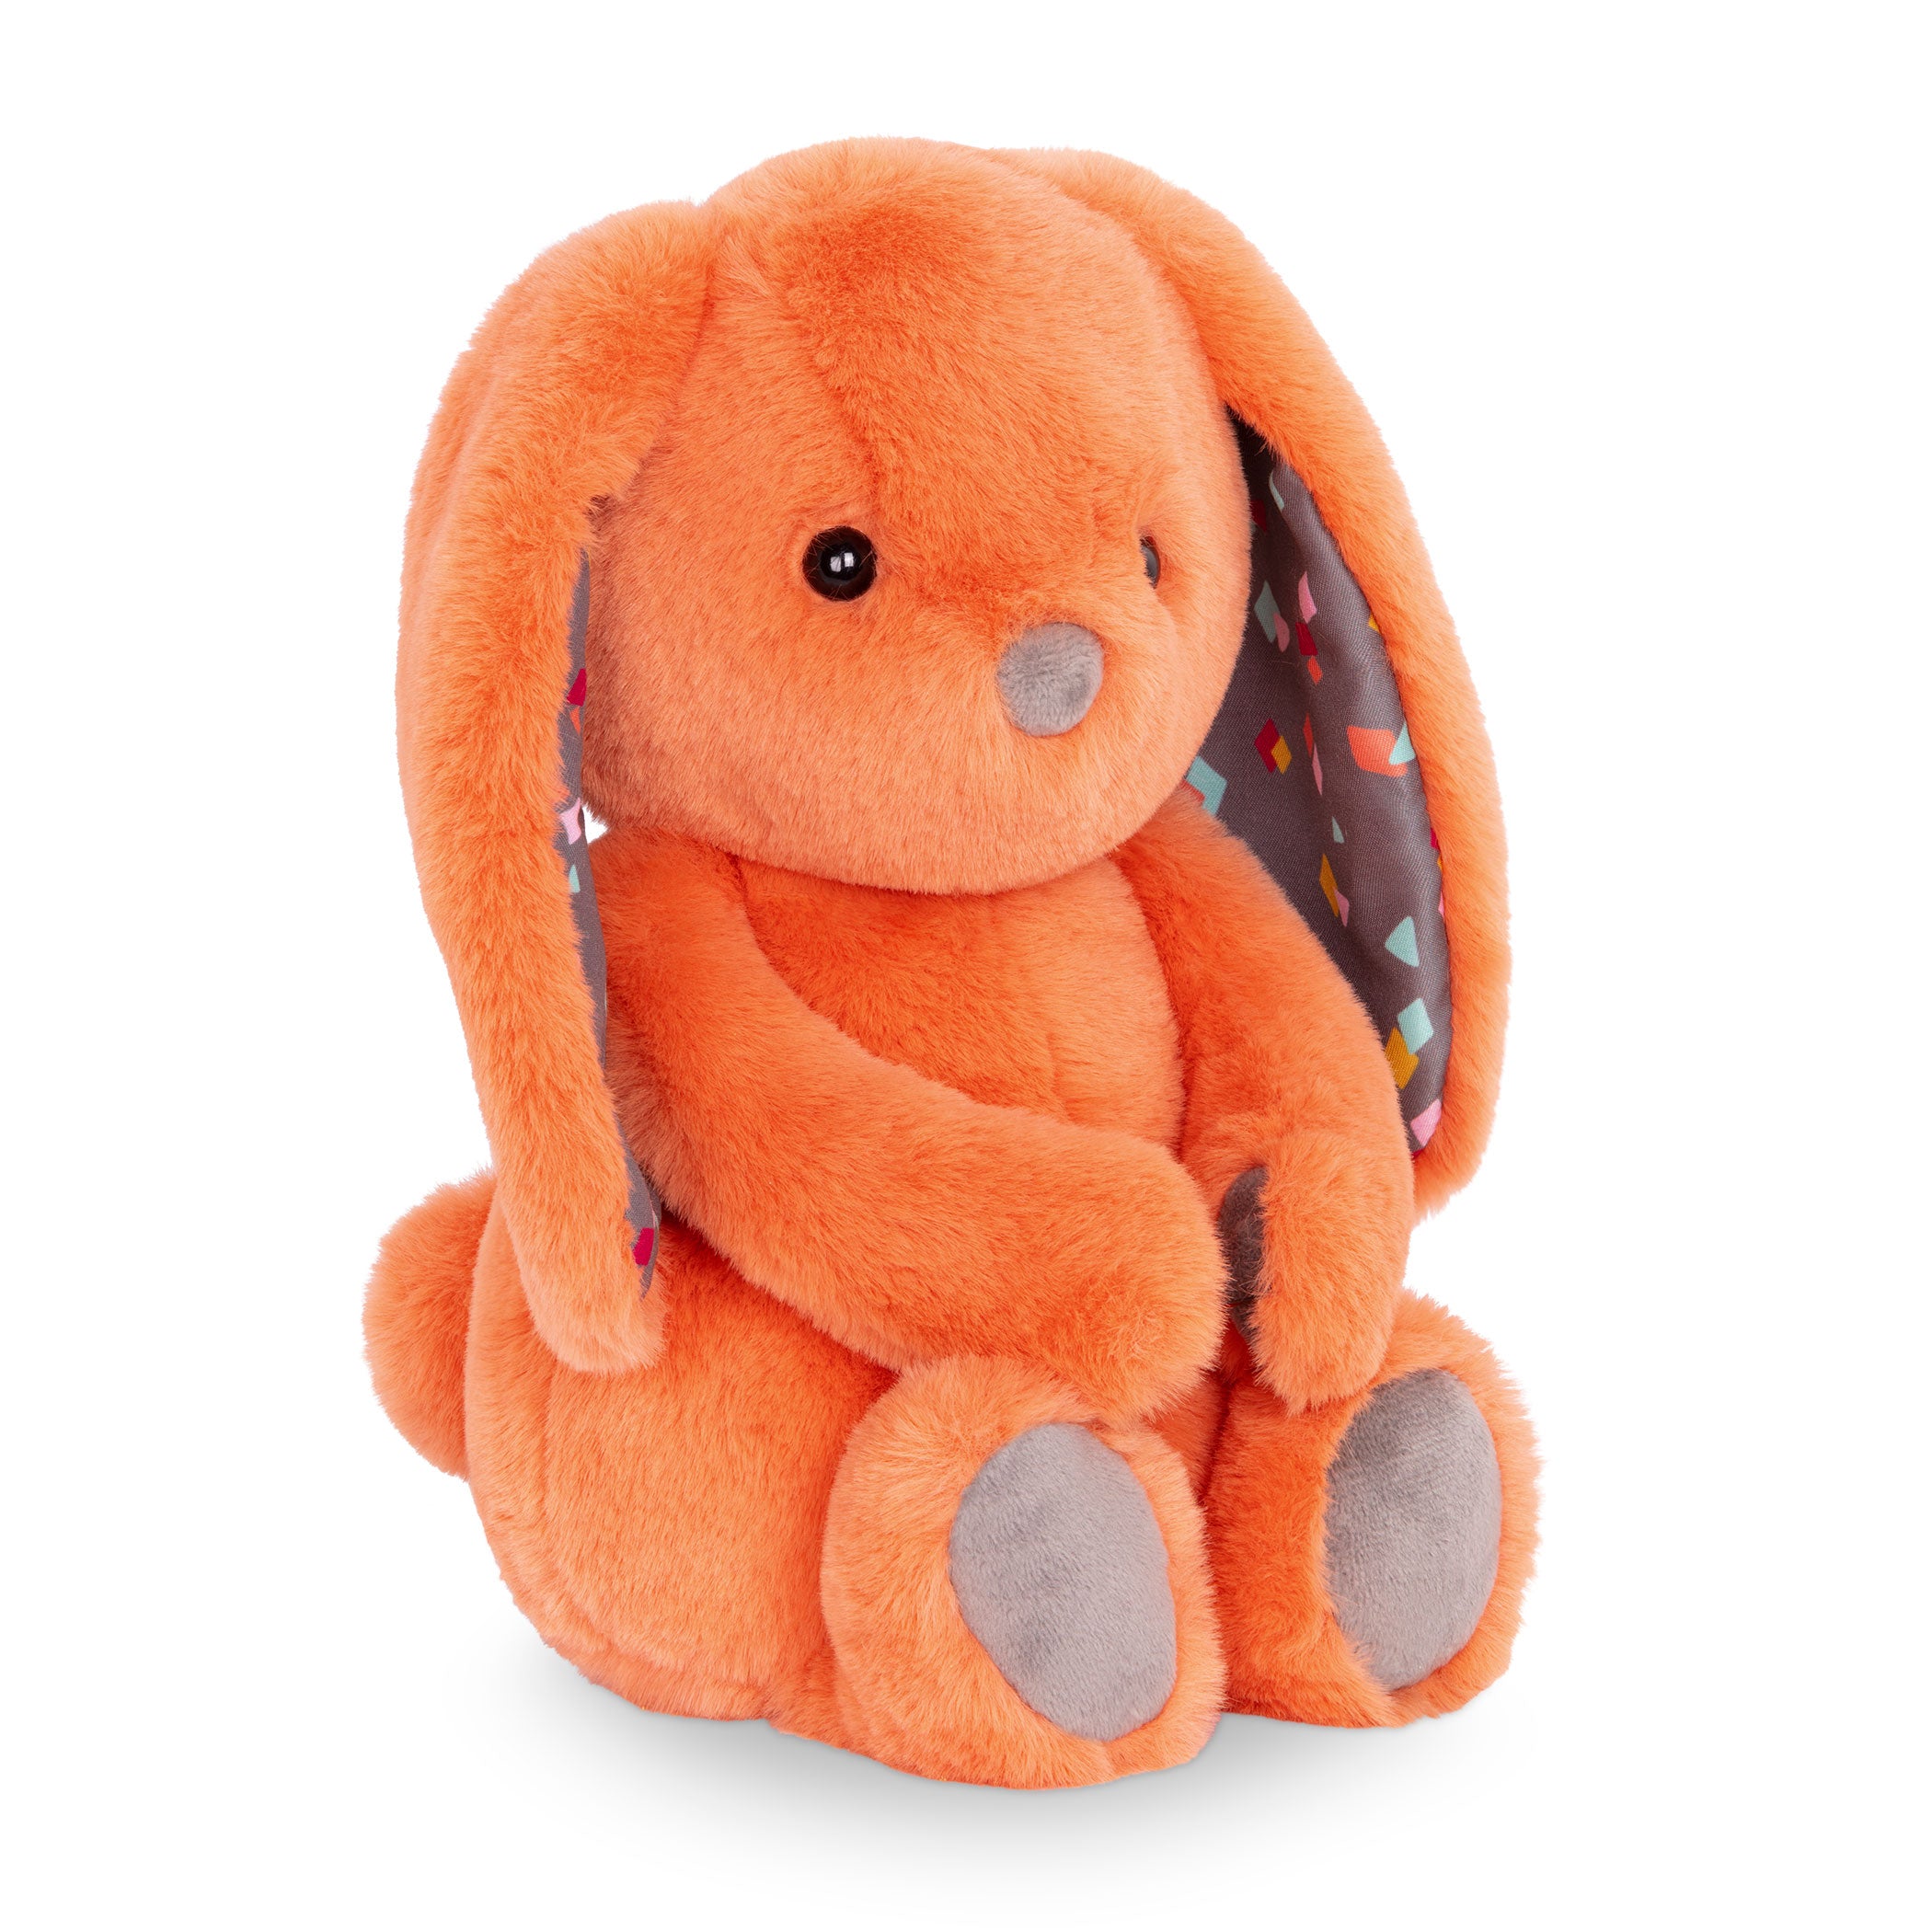 Orange plush bunny.